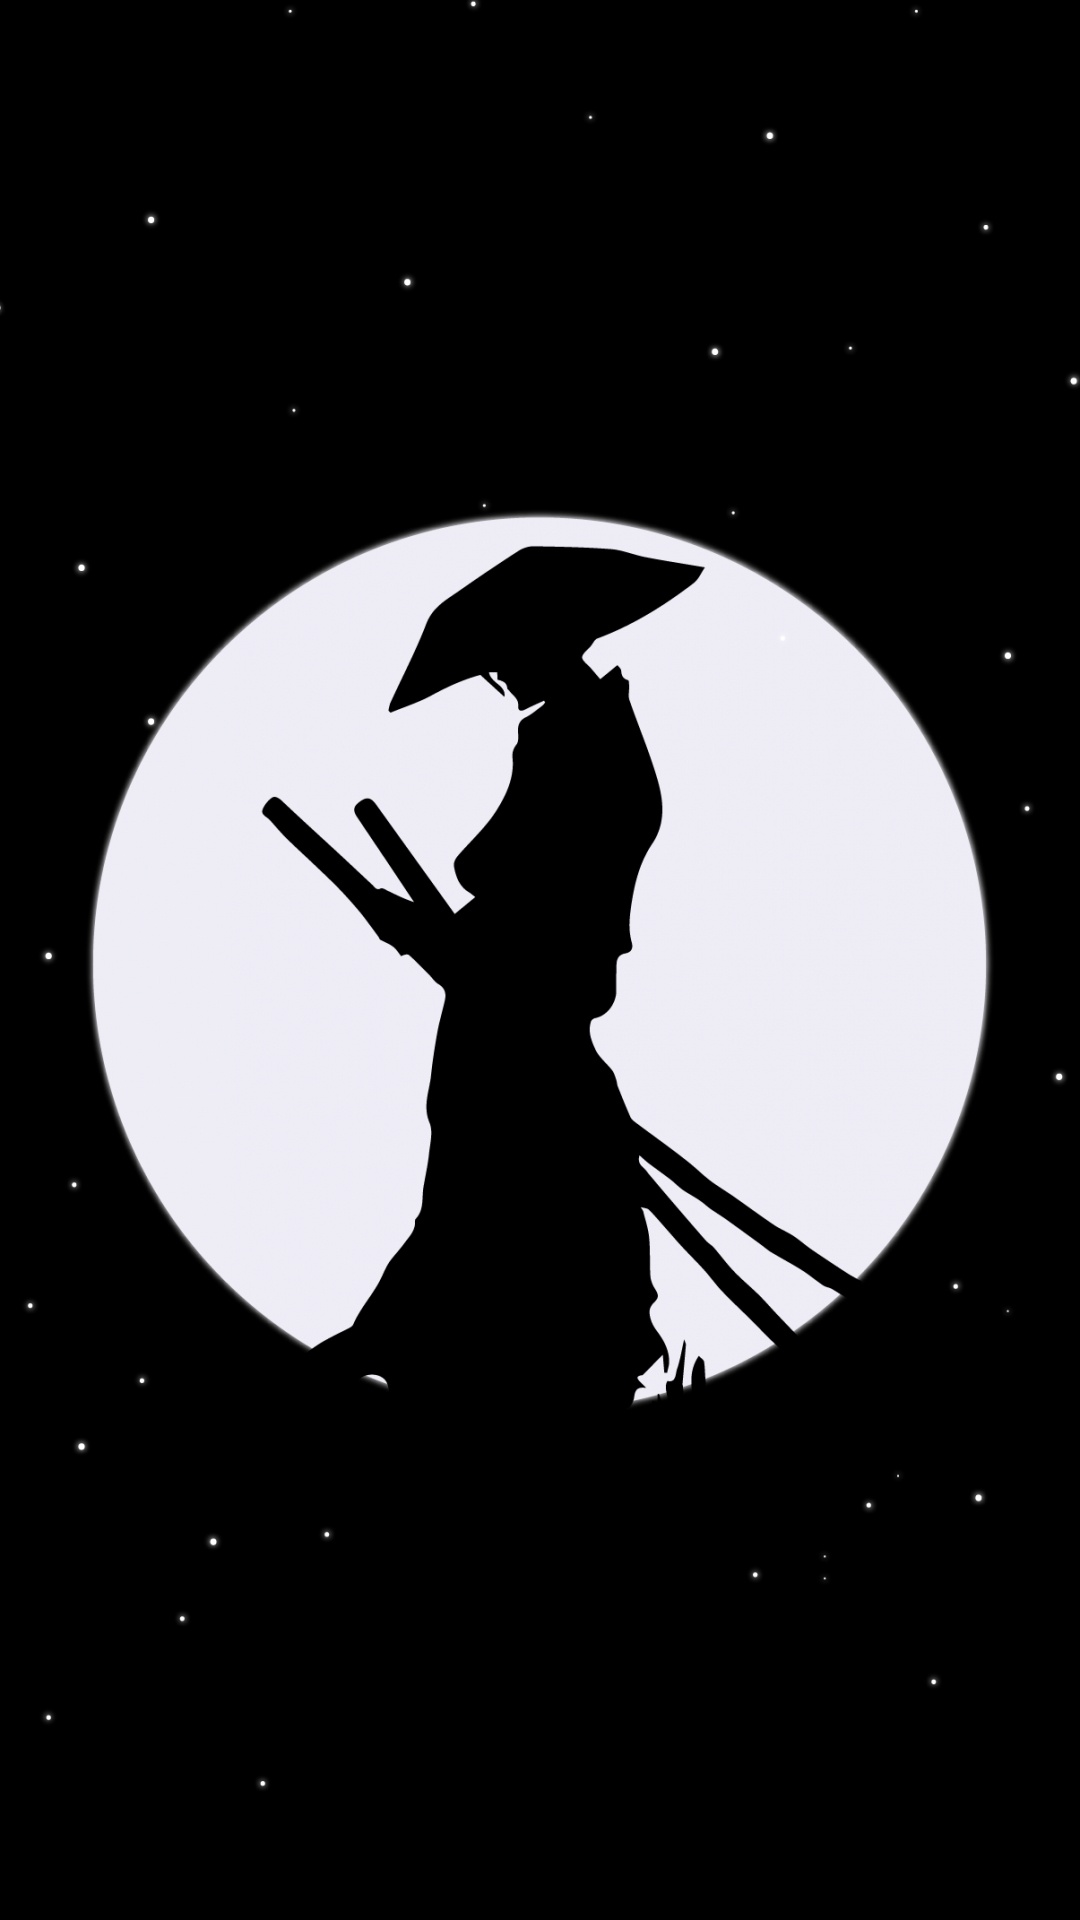 Samurai, Luna, Amoled, Espacio, Objeto Astronómico. Wallpaper in 1080x1920 Resolution